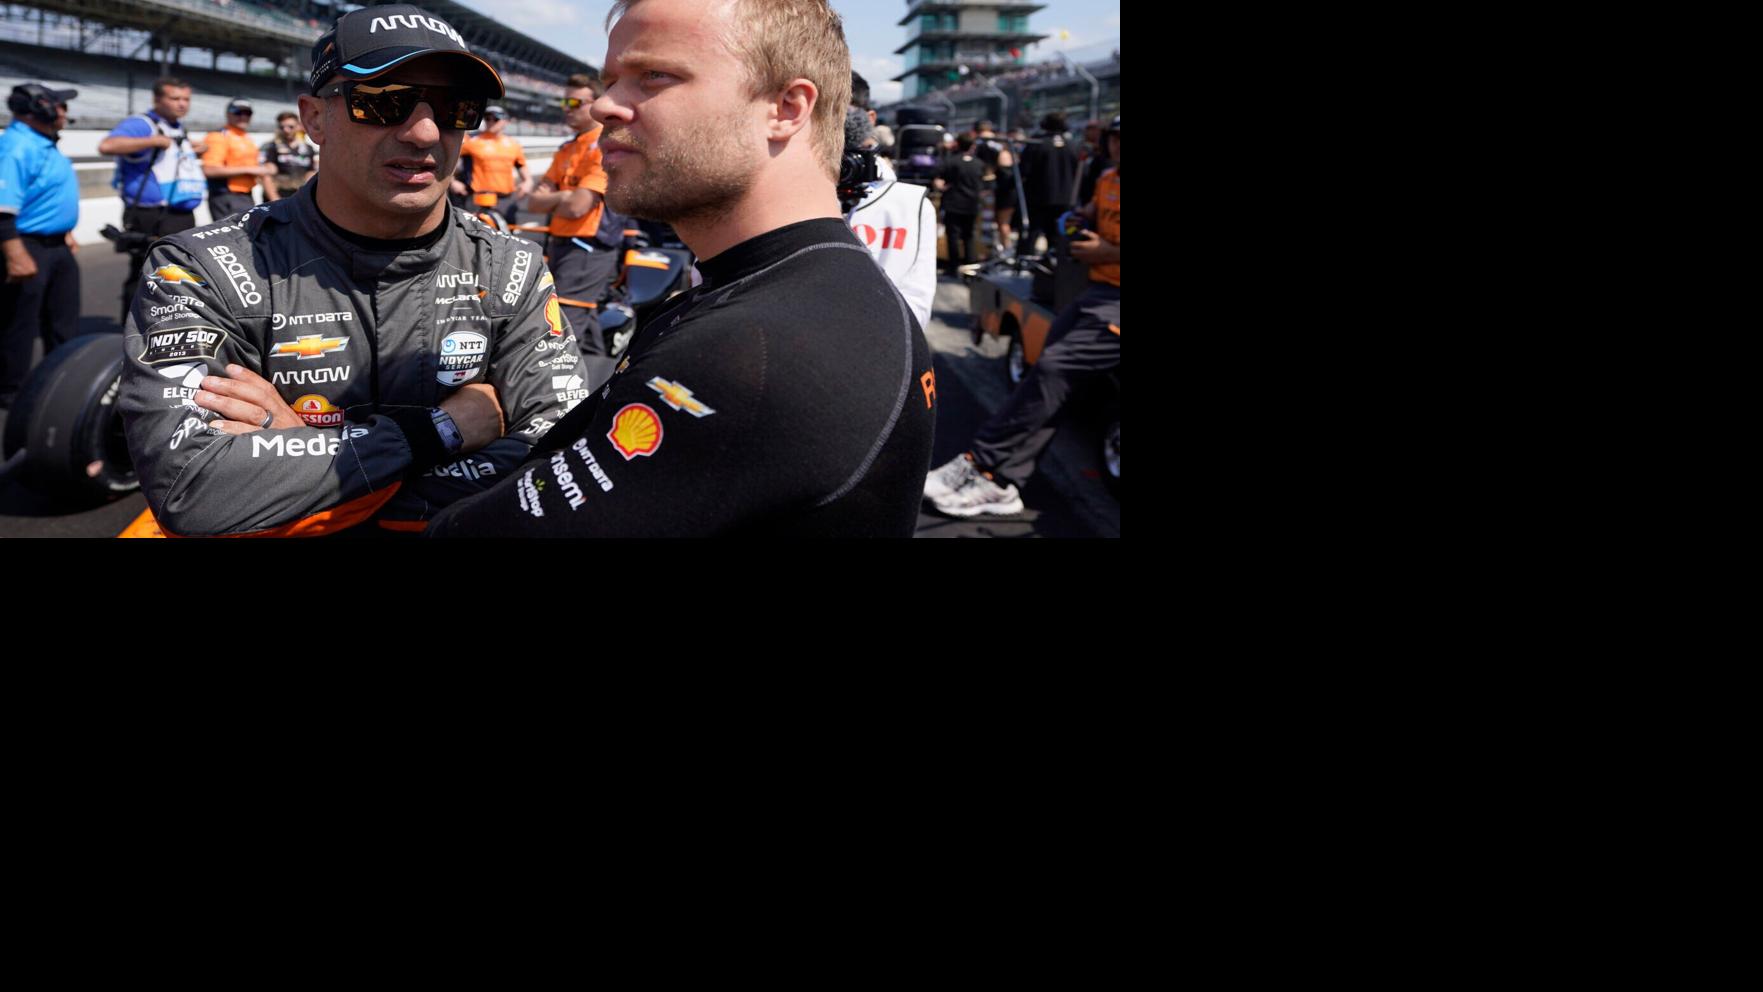 Chevrolet, McLaren soar as Rahal struggles at Indy 500 qualifying